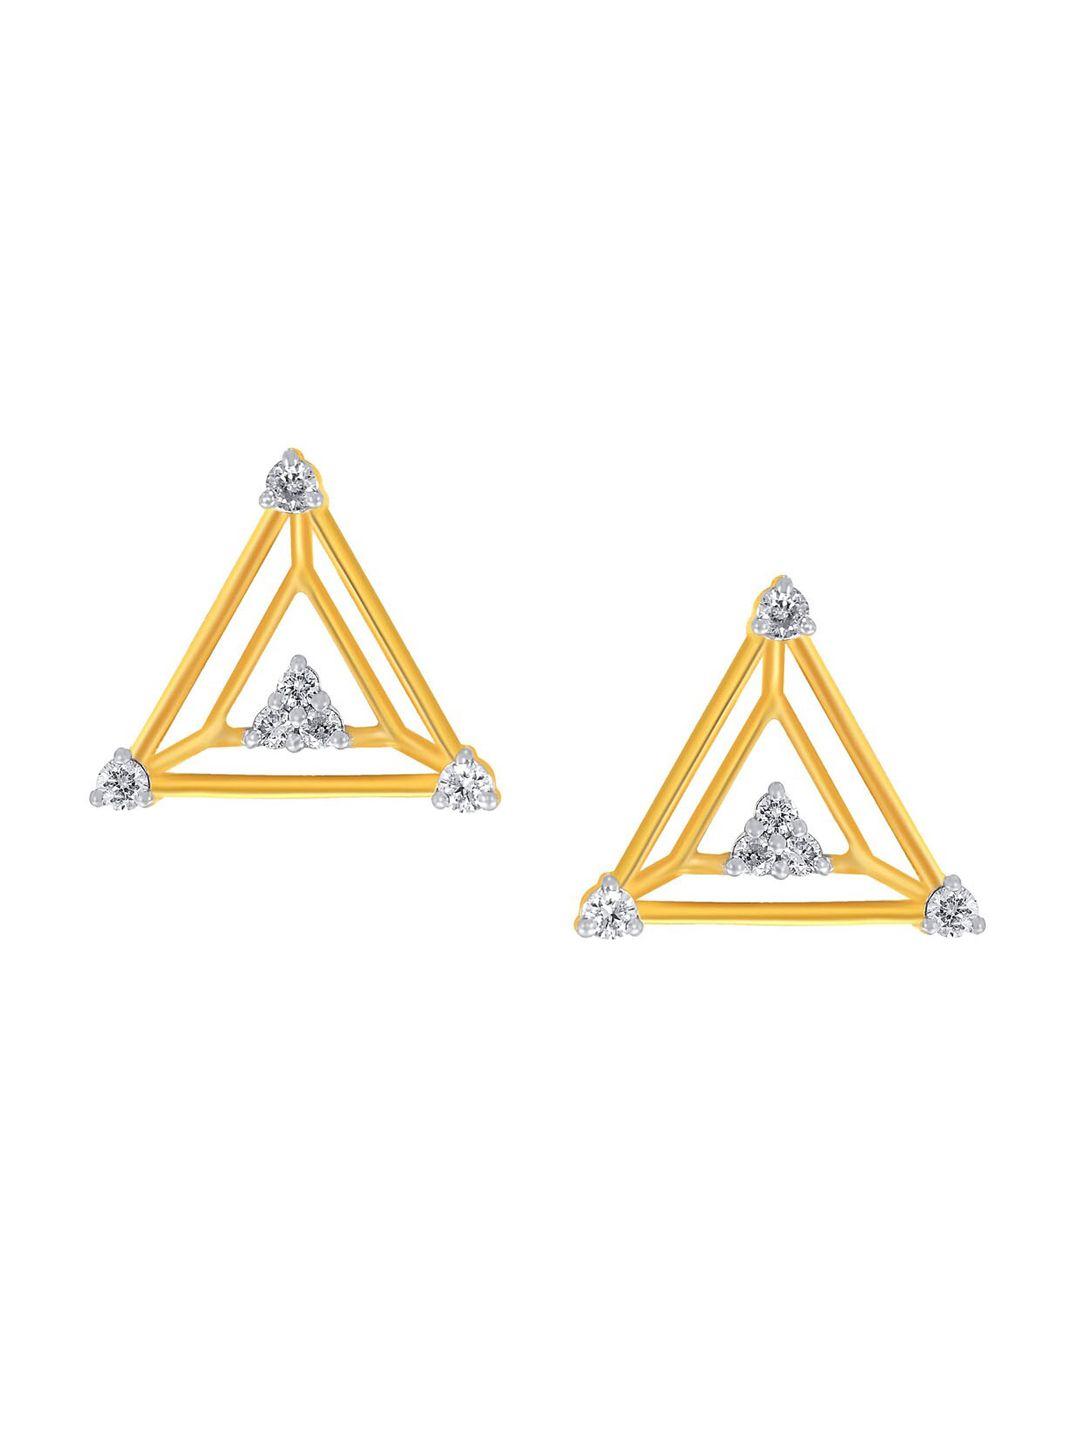 senco-chic-triangular-duo18kt-diamond-studded-stud-earrings-1.8gm